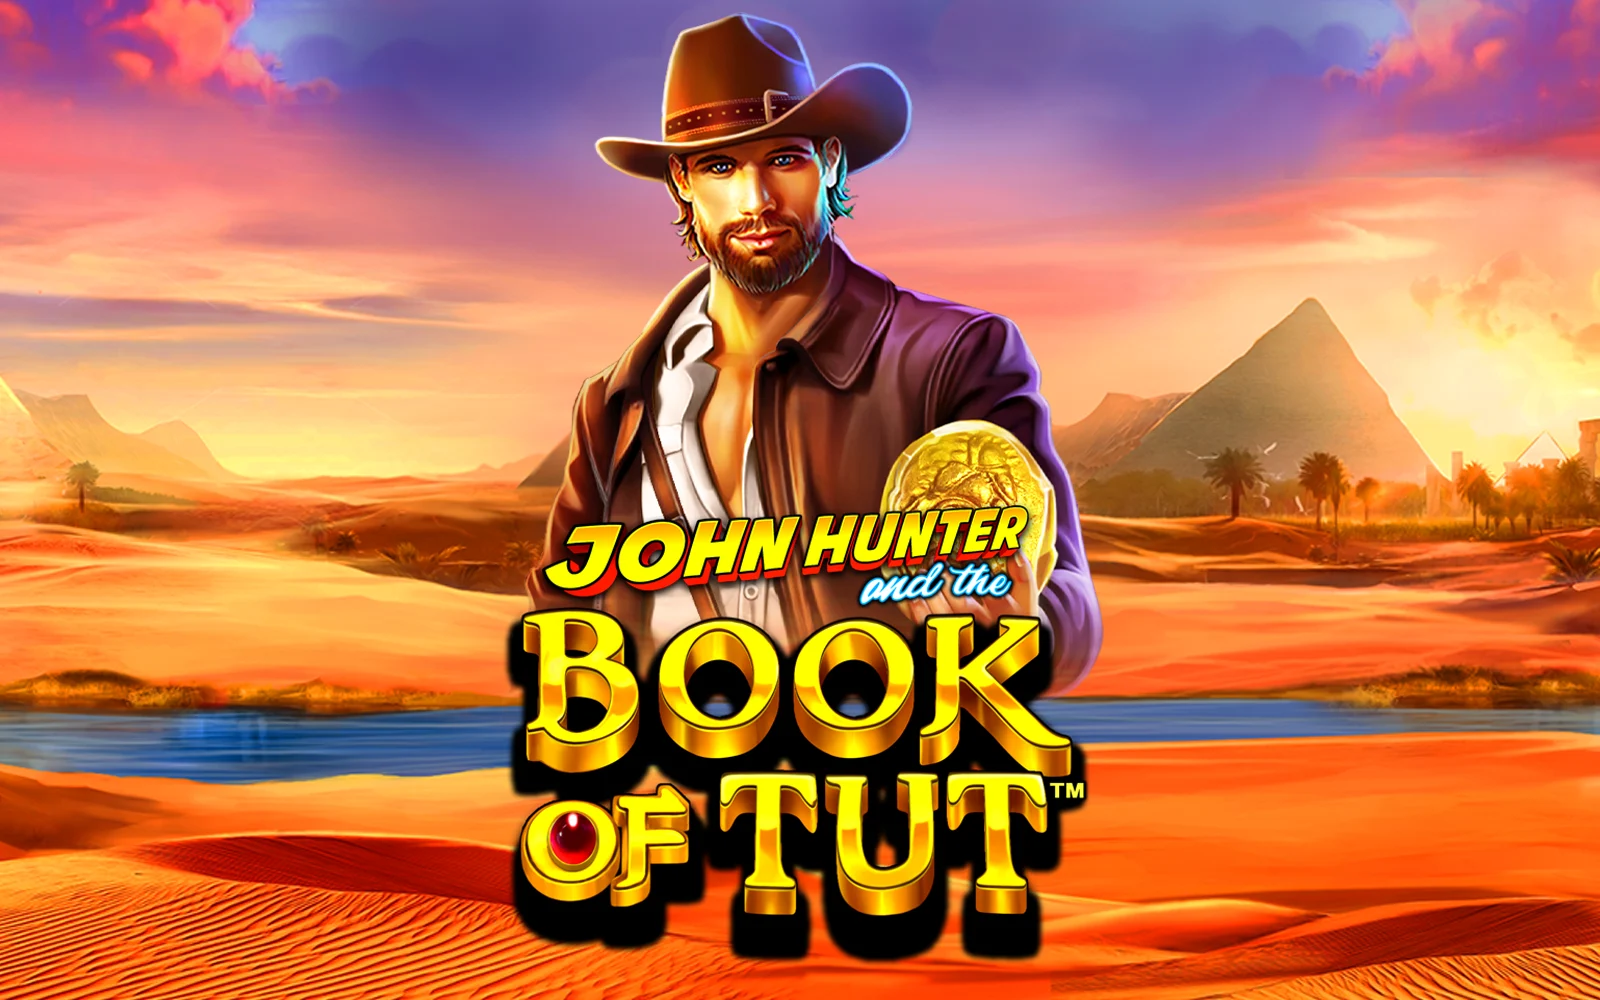 Play John Hunter and the Book of Tut™ on Starcasino.be online casino